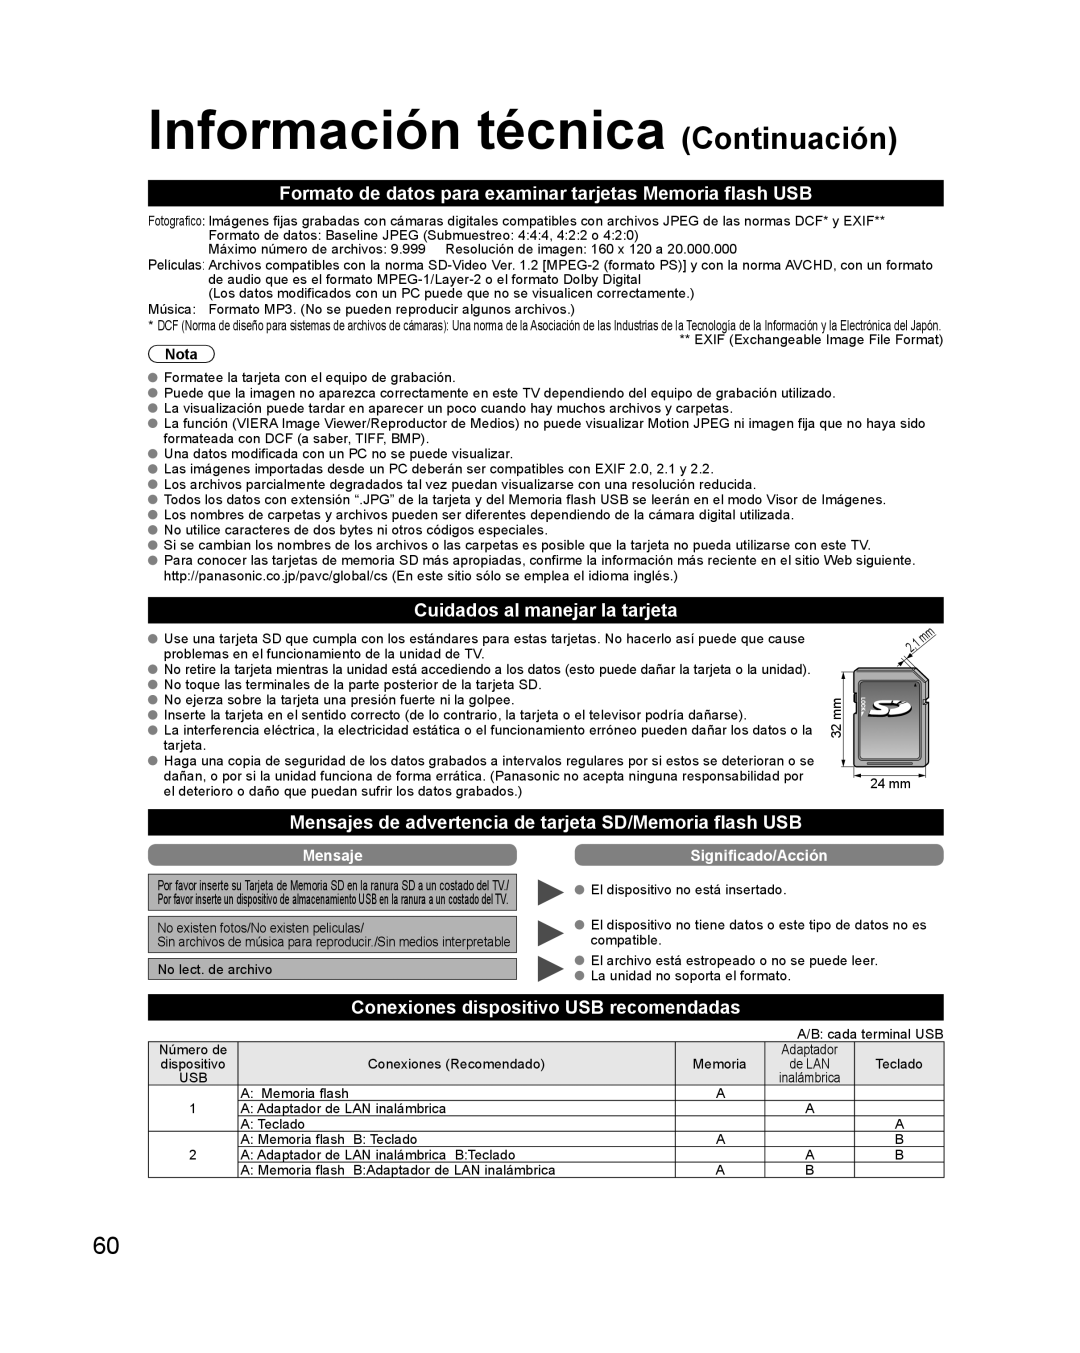 Panasonic TQB2AA0579 Información técnica Continuación, Formato de datos para examinar tarjetas Memoria flash USB, Mensaje 